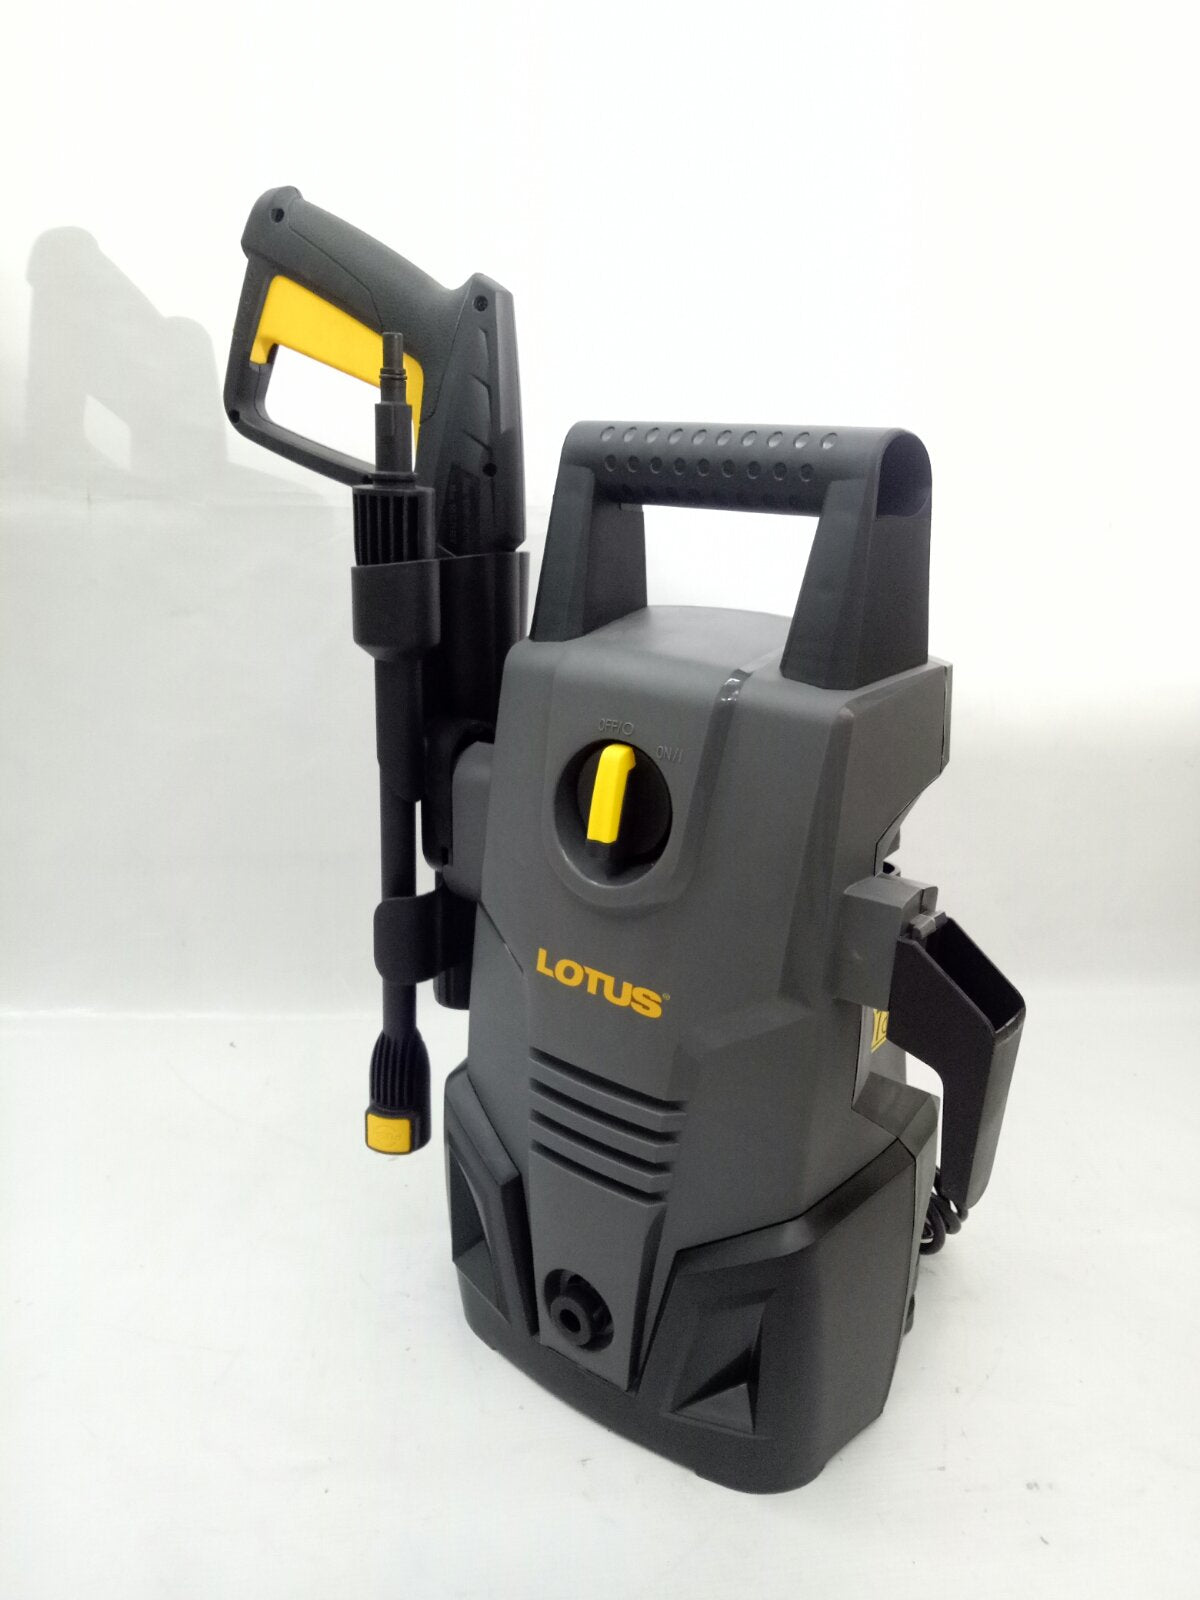 LOTUS LTPW1400C2X Portable Pressure Washer Sprayer 1,400 Watt